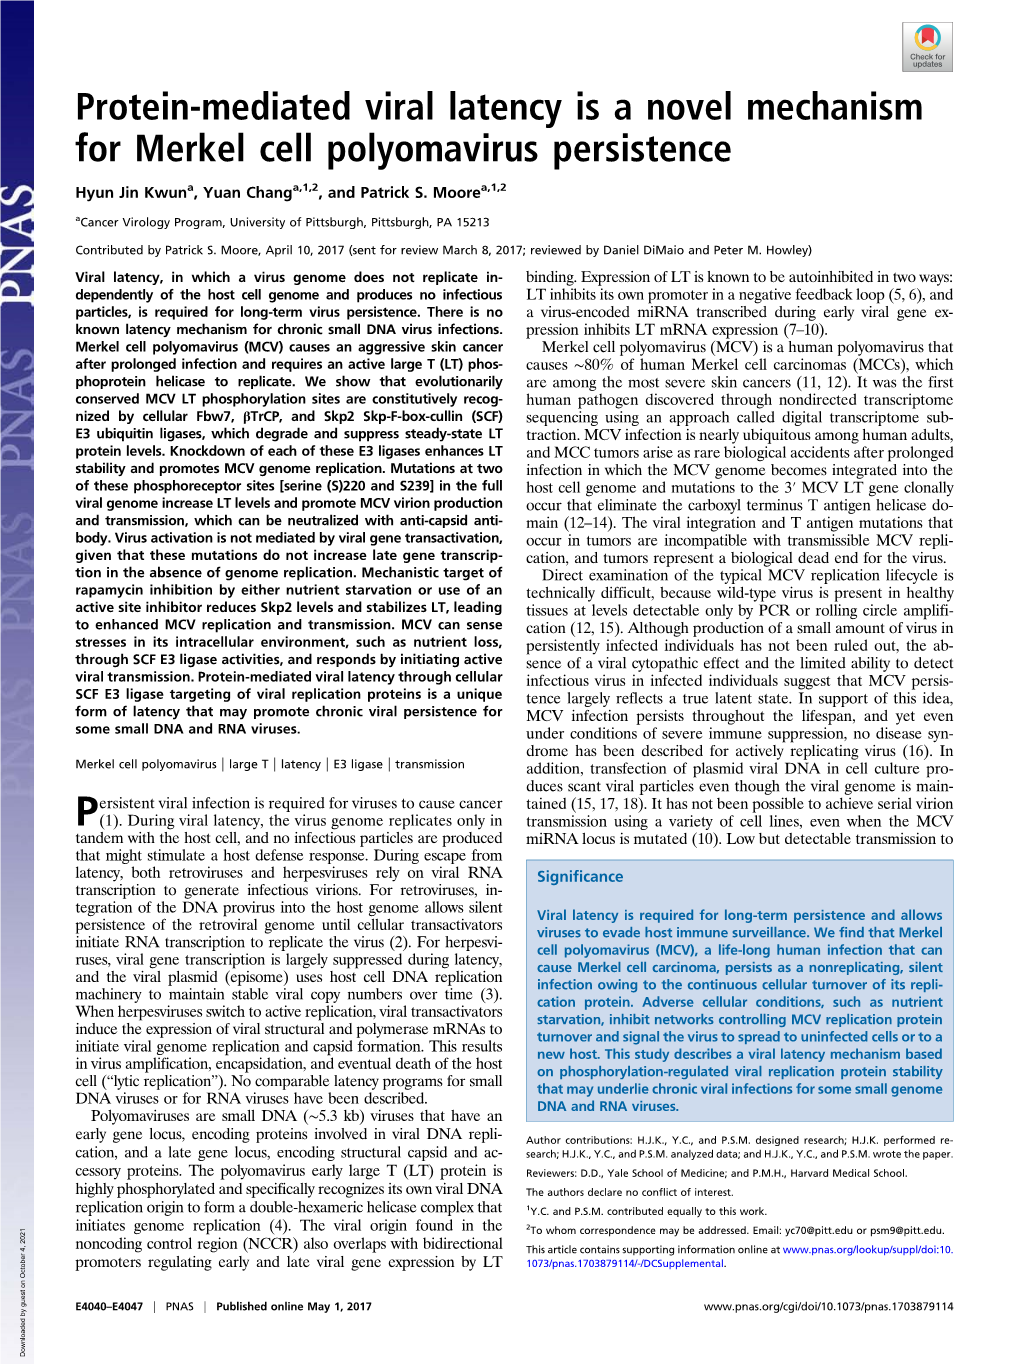 Protein-Mediated Viral Latency Is a Novel Mechanism for Merkel Cell Polyomavirus Persistence